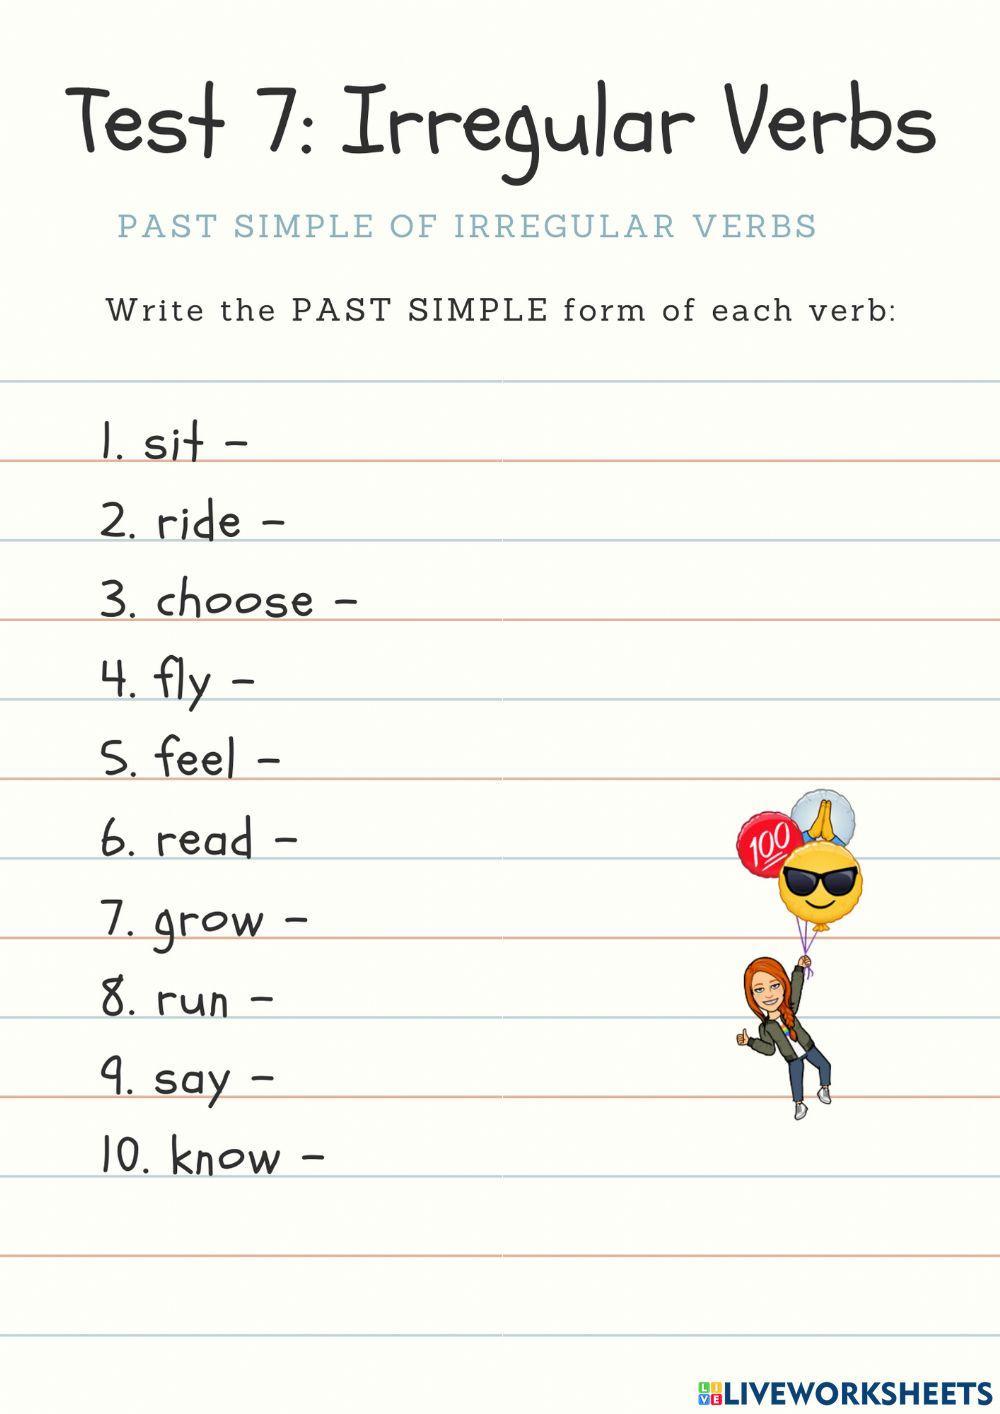 Irregular Verb Past Simple Test (7)